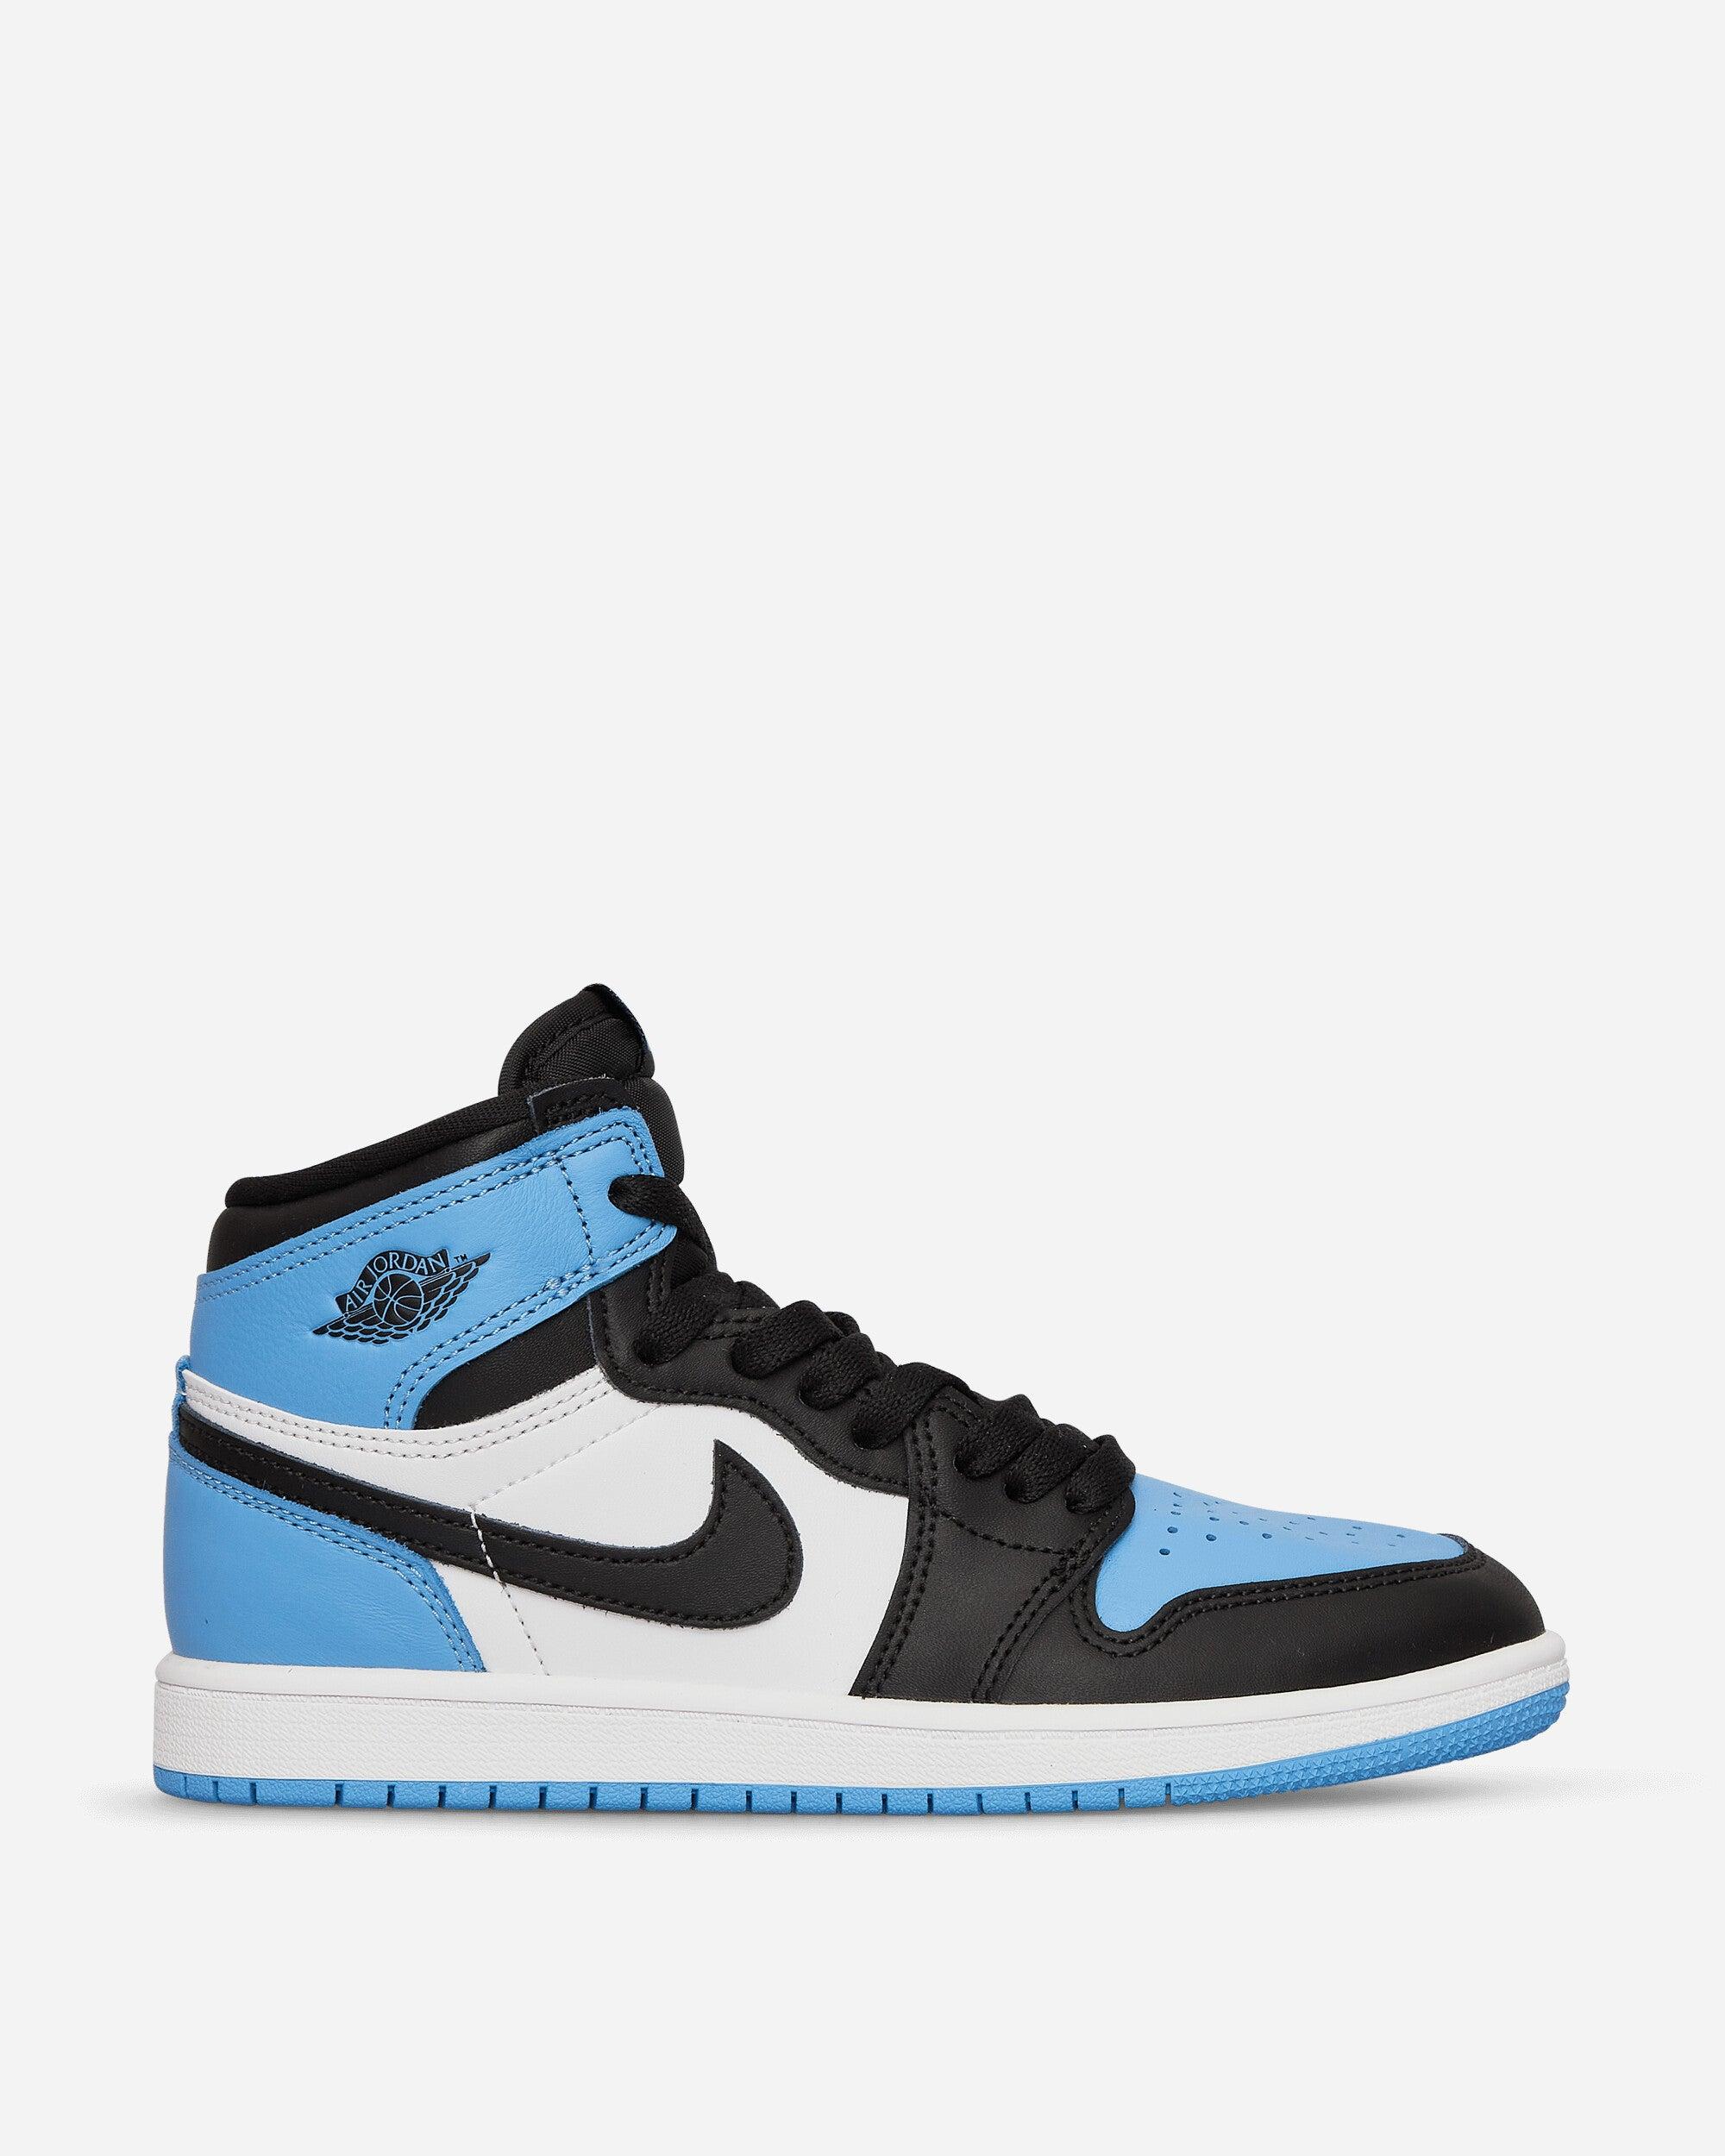 Nike Air Jordan 1 Retro High Og Unc Toe Sneakers (ps) University Blue /  Black / White | Lyst